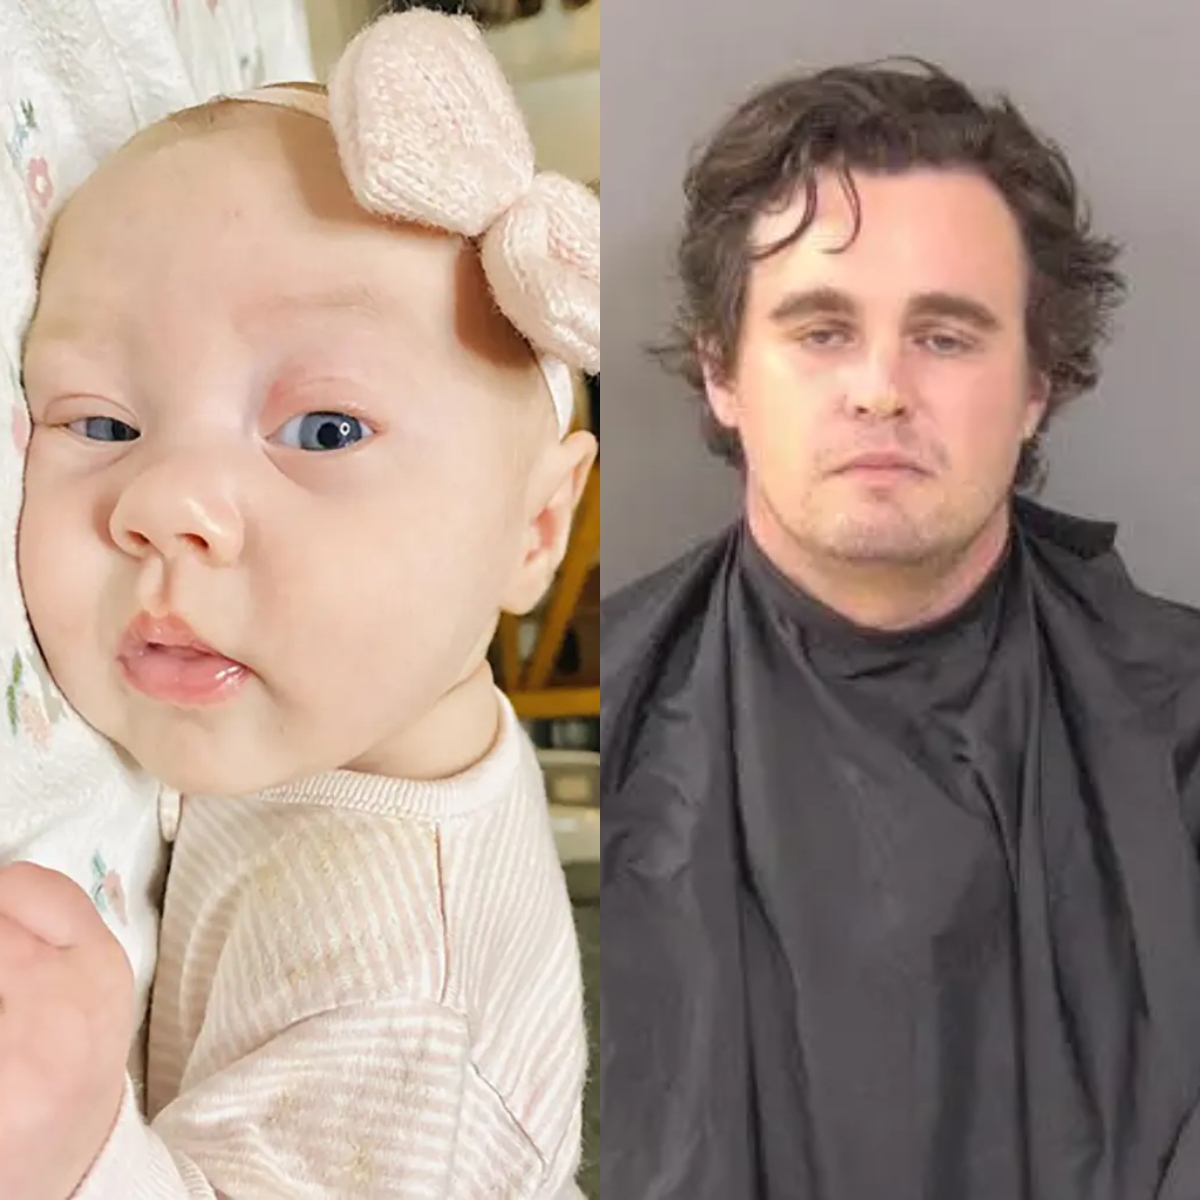  Pai mata filha de 2 meses ao enfiar lenço em garganta para abafar choro da bebê 